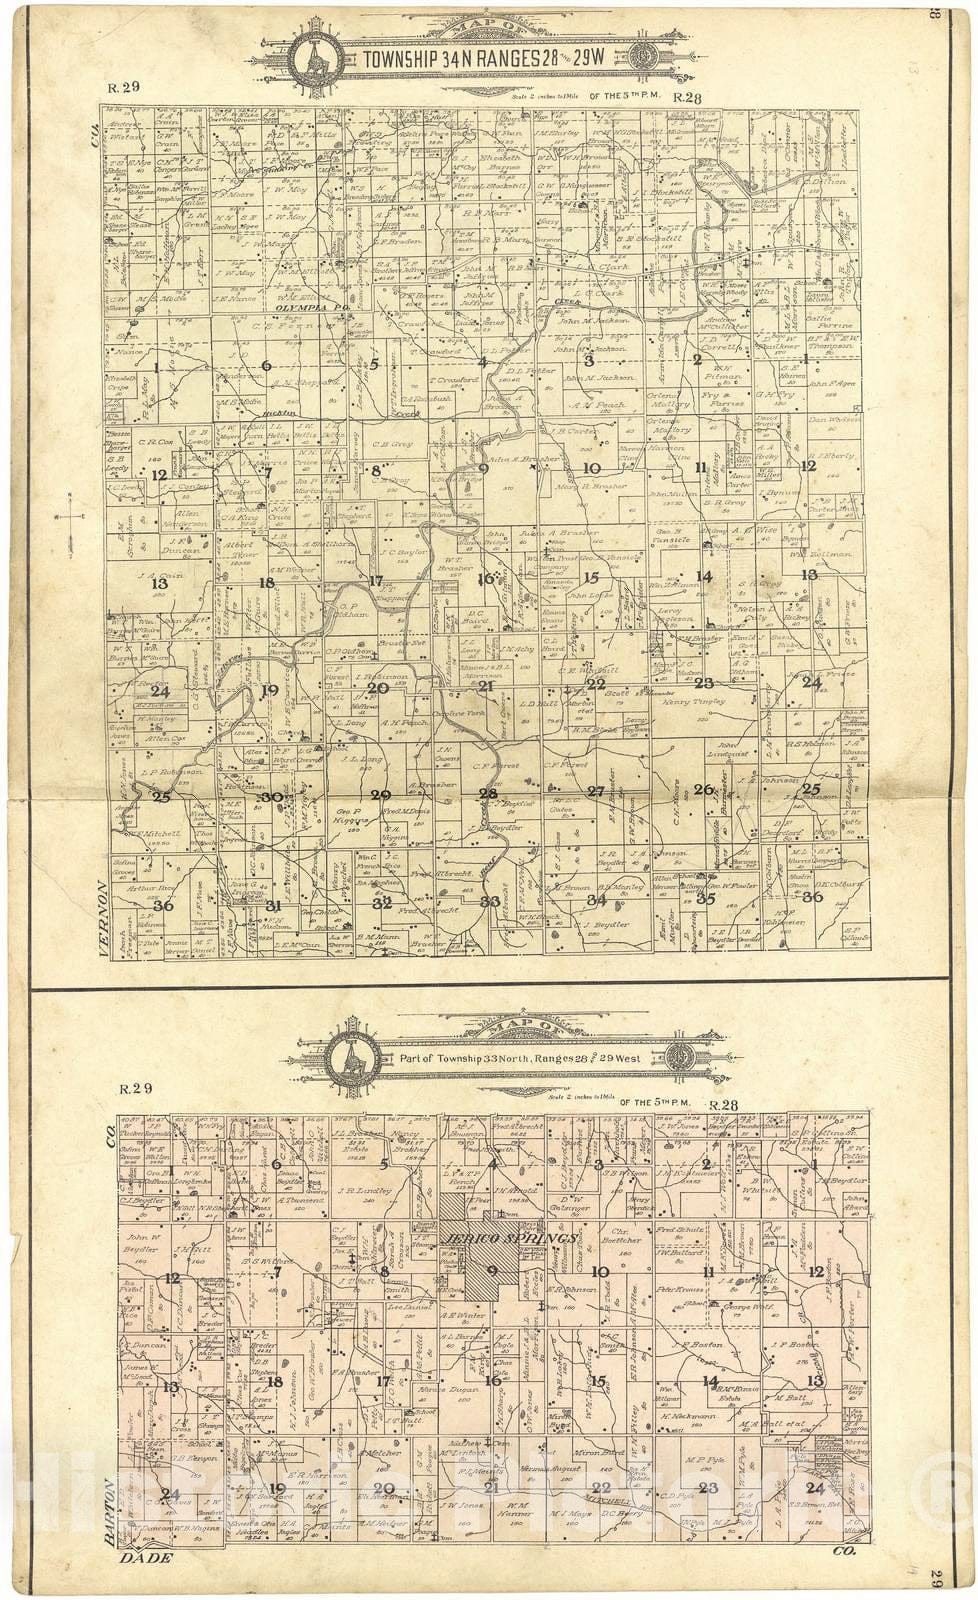 Historic 1908 Map - Standard Atlas of Cedar County, Missouri - Map of Township 34 N Range 27 W